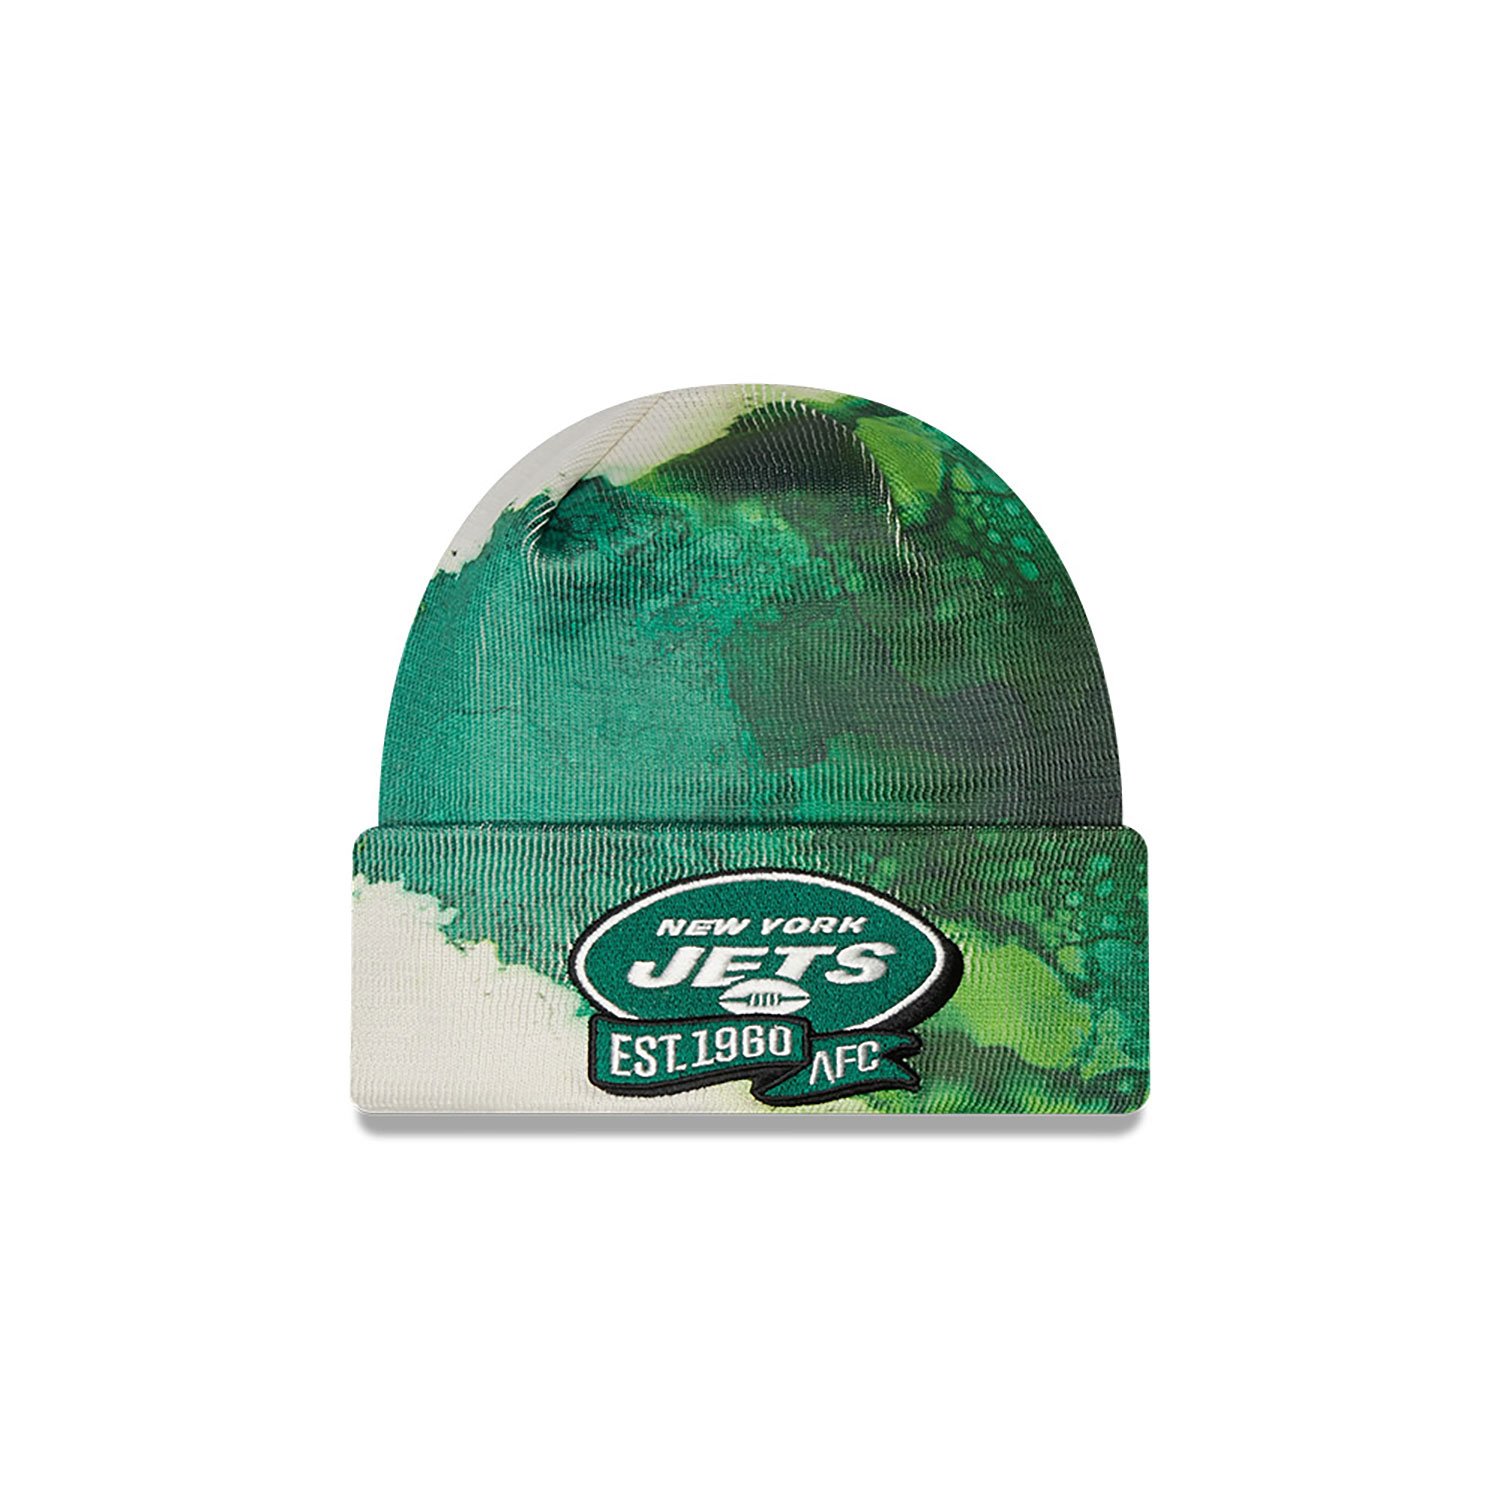 New York Jets NFL Sideline Cilantro Green Beanie Hat